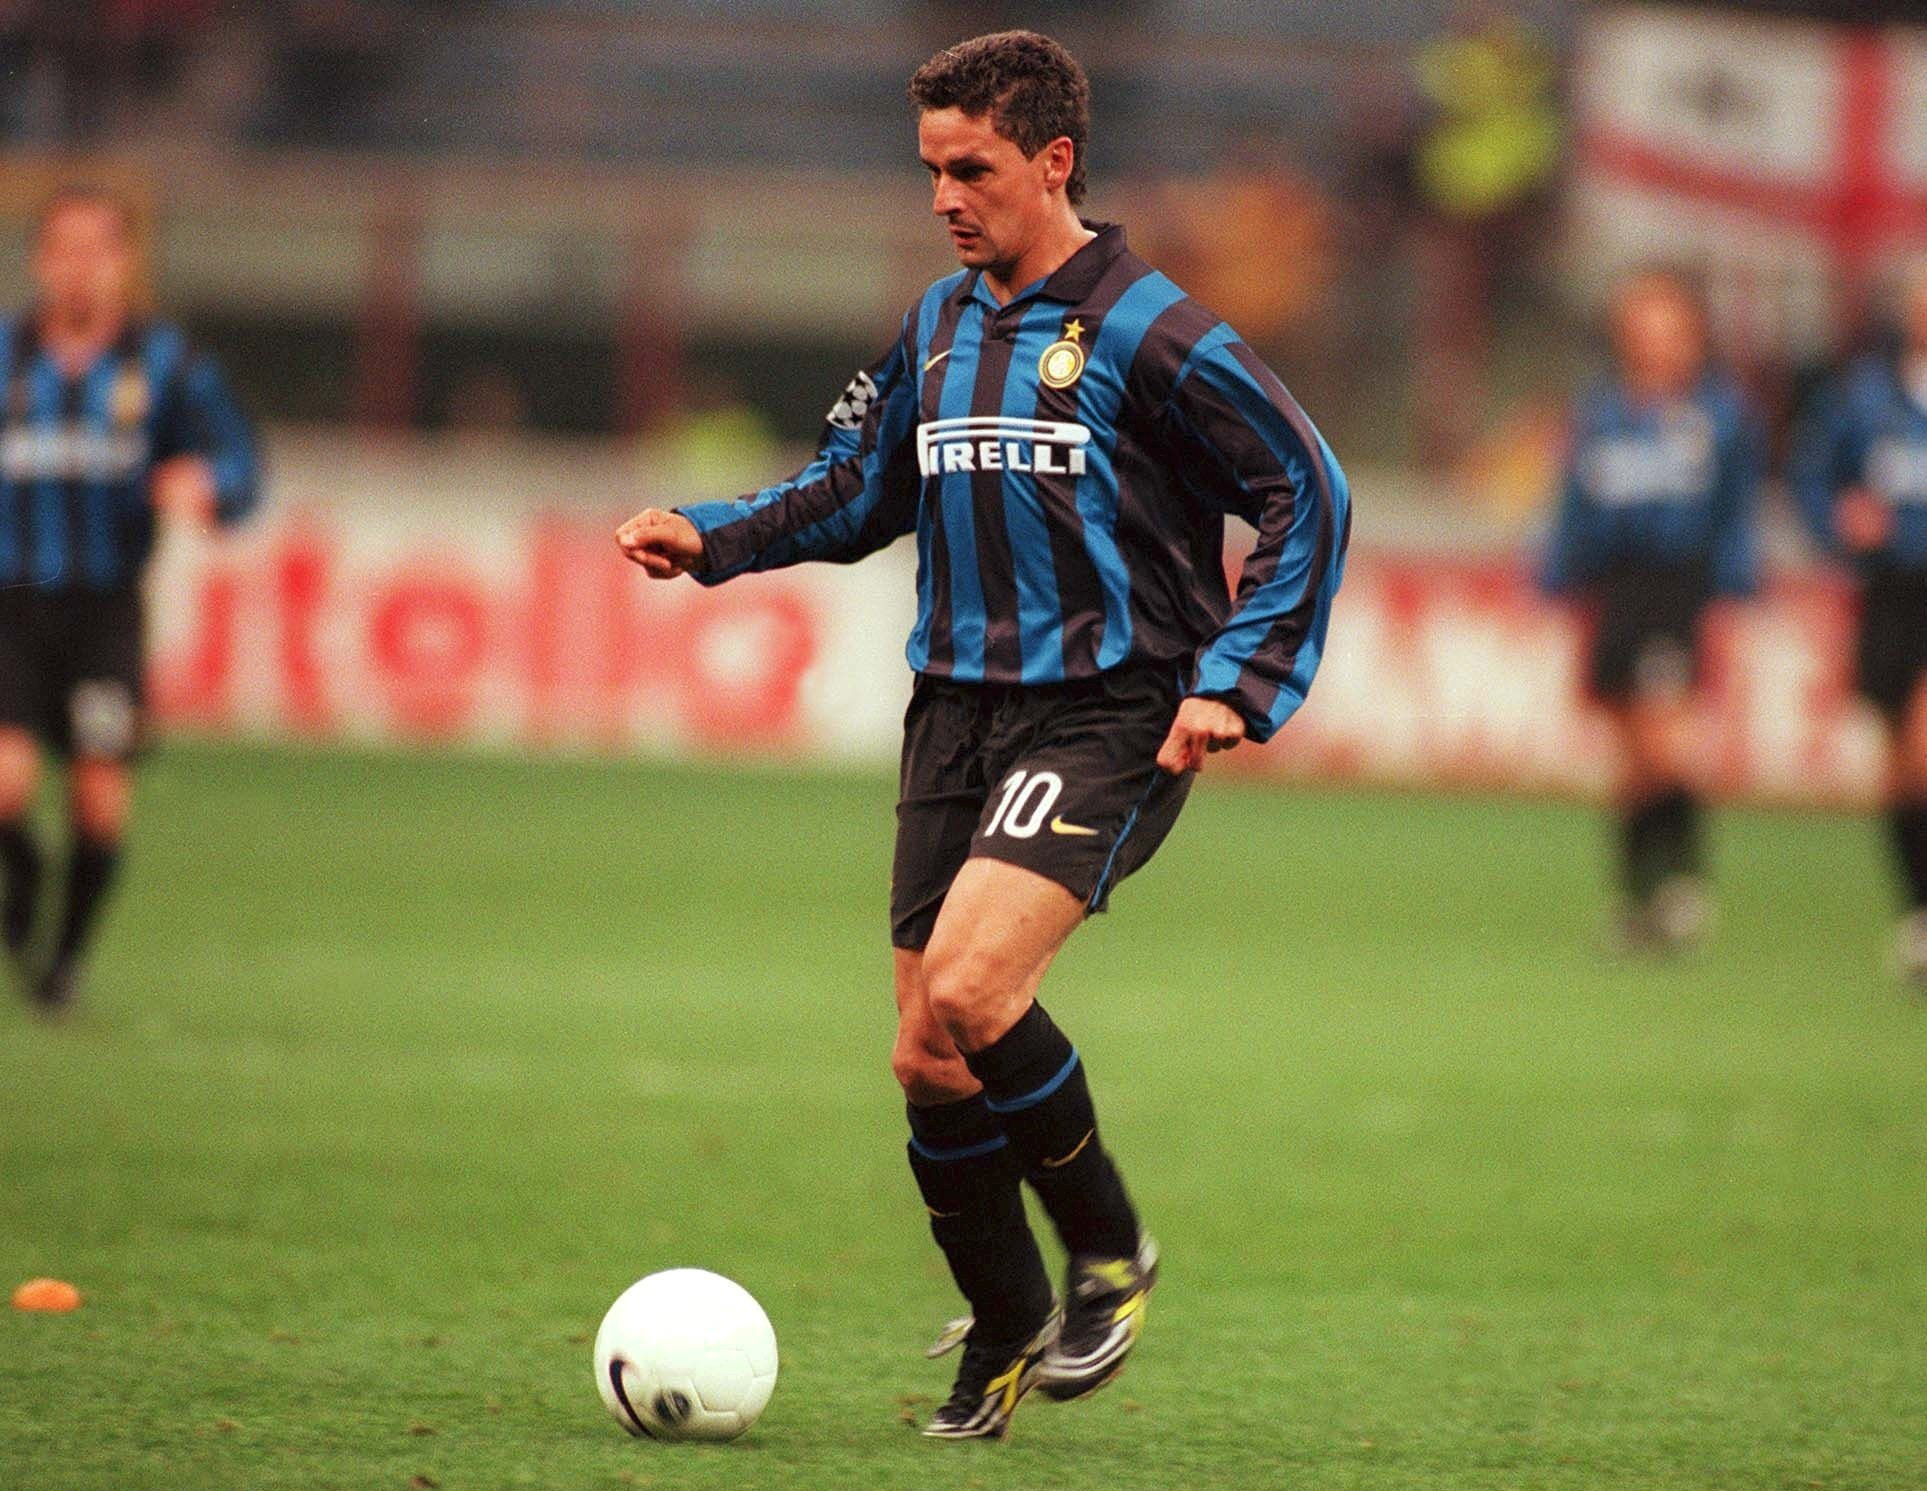 Moratti: “Baggio gave everything to Inter”